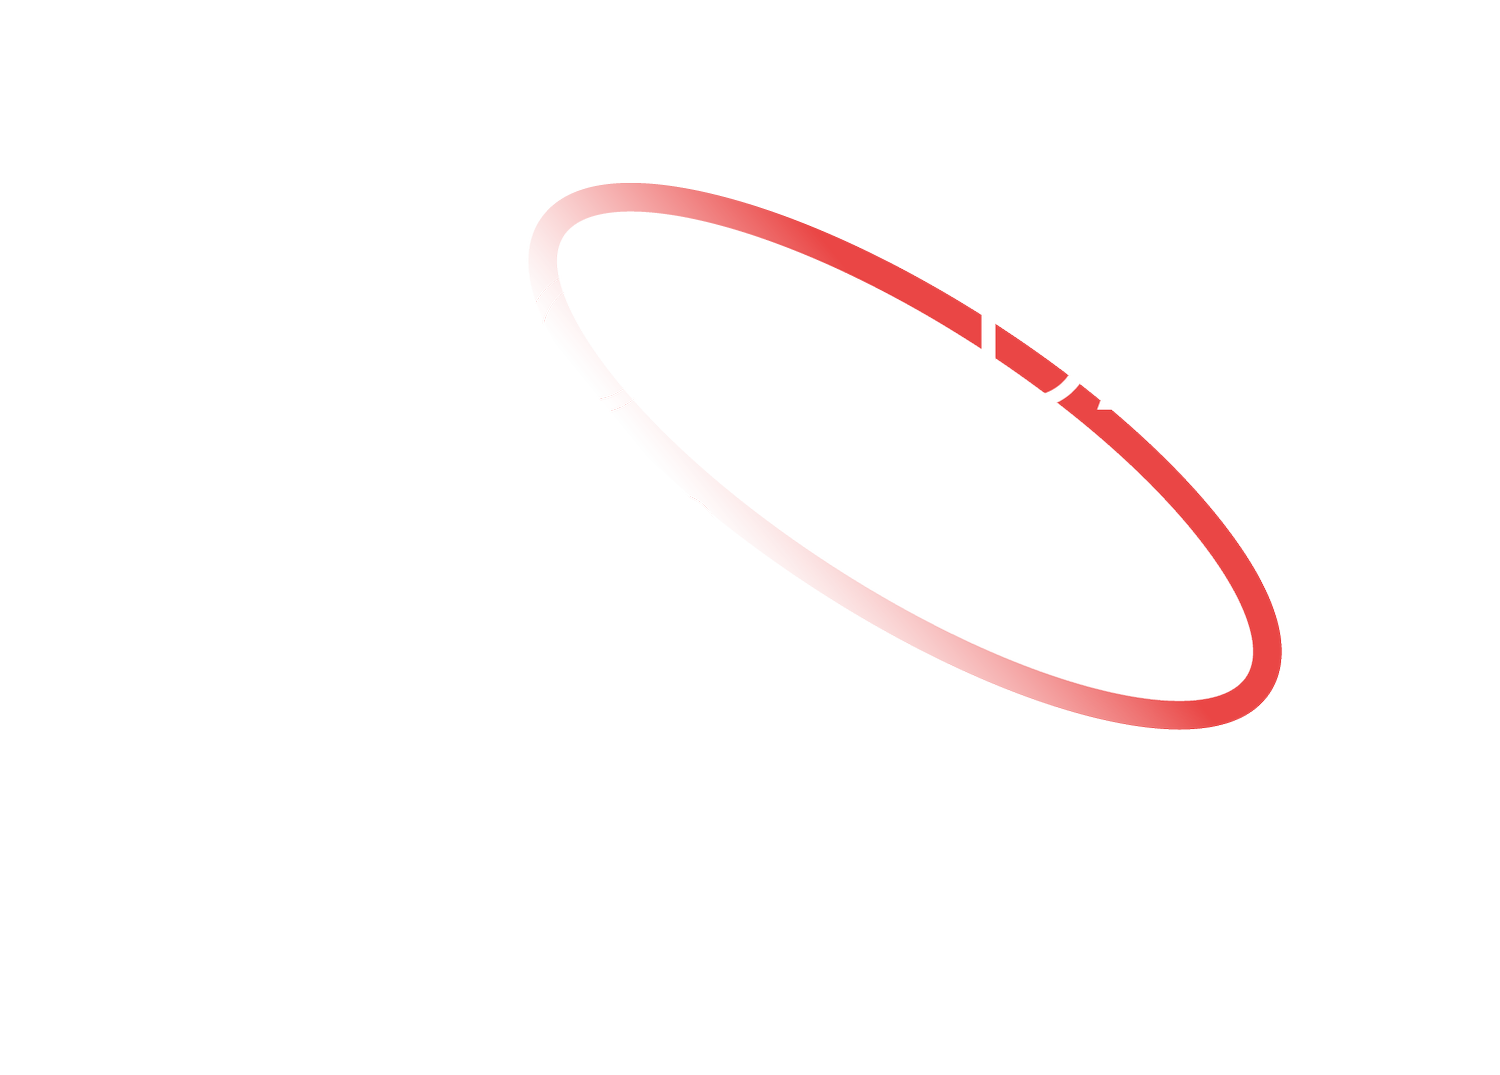 Before Day Zero